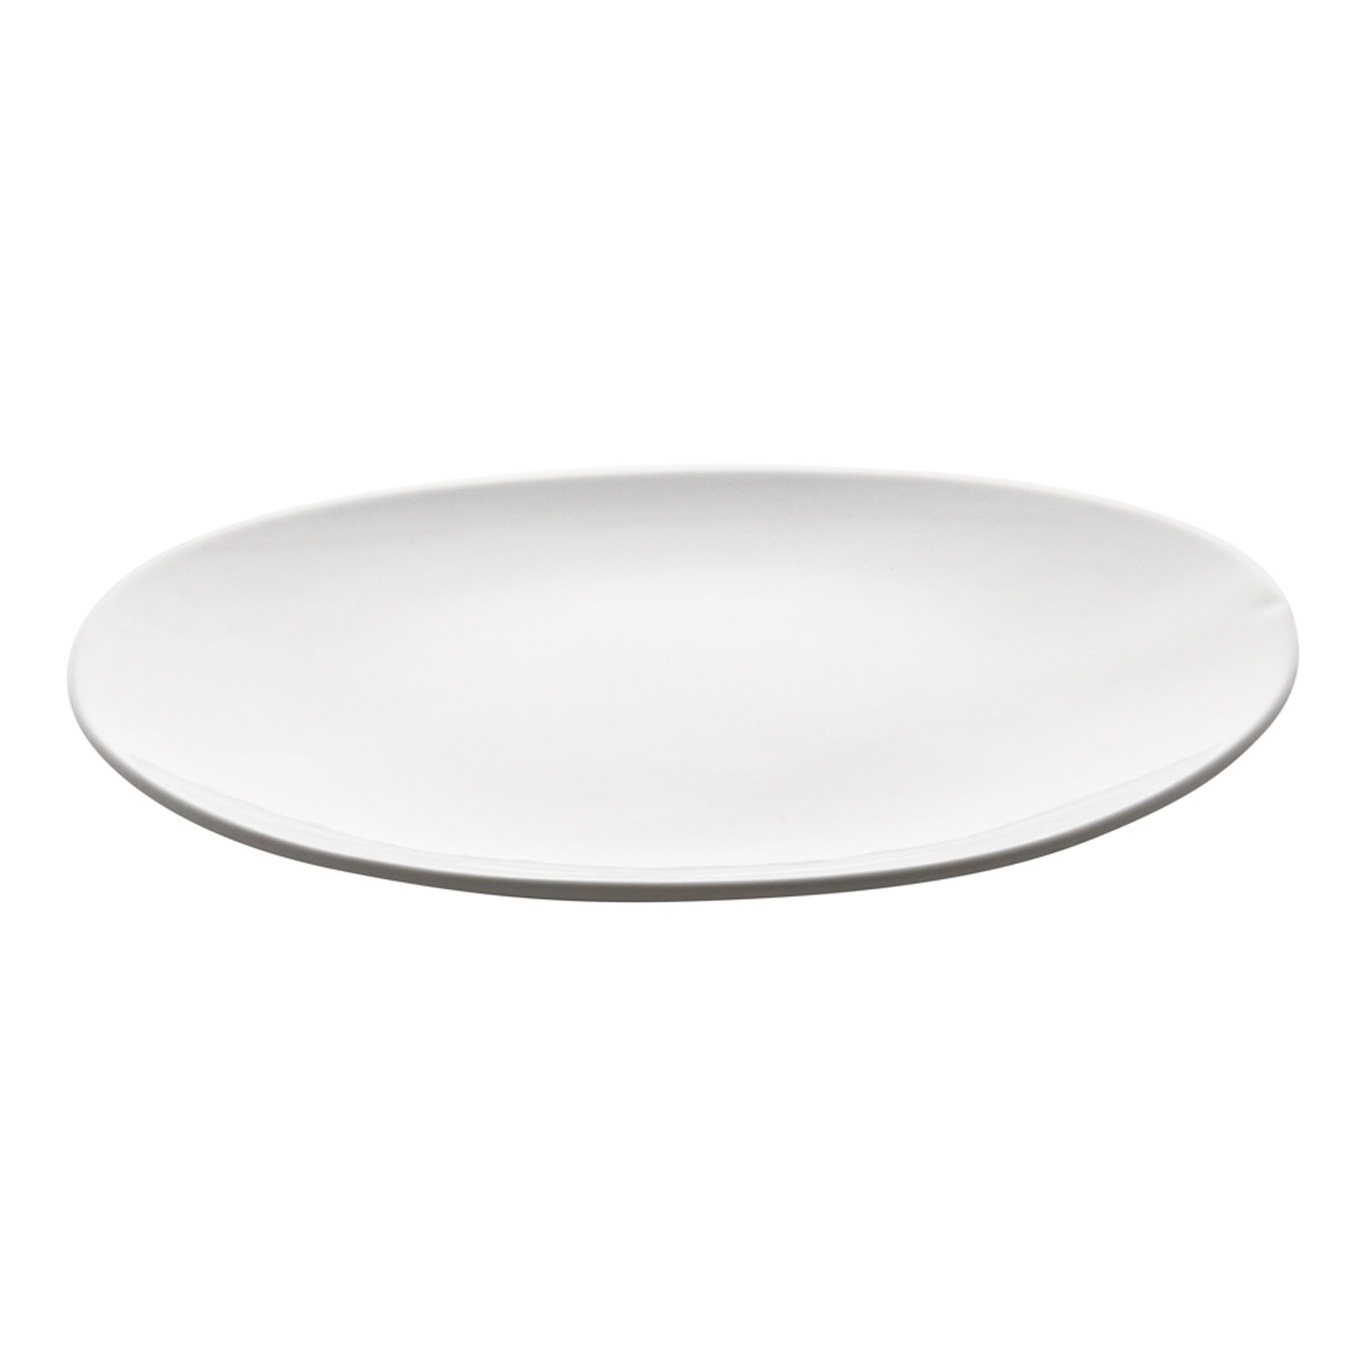 Shell Plate 27,5x28 cm, White